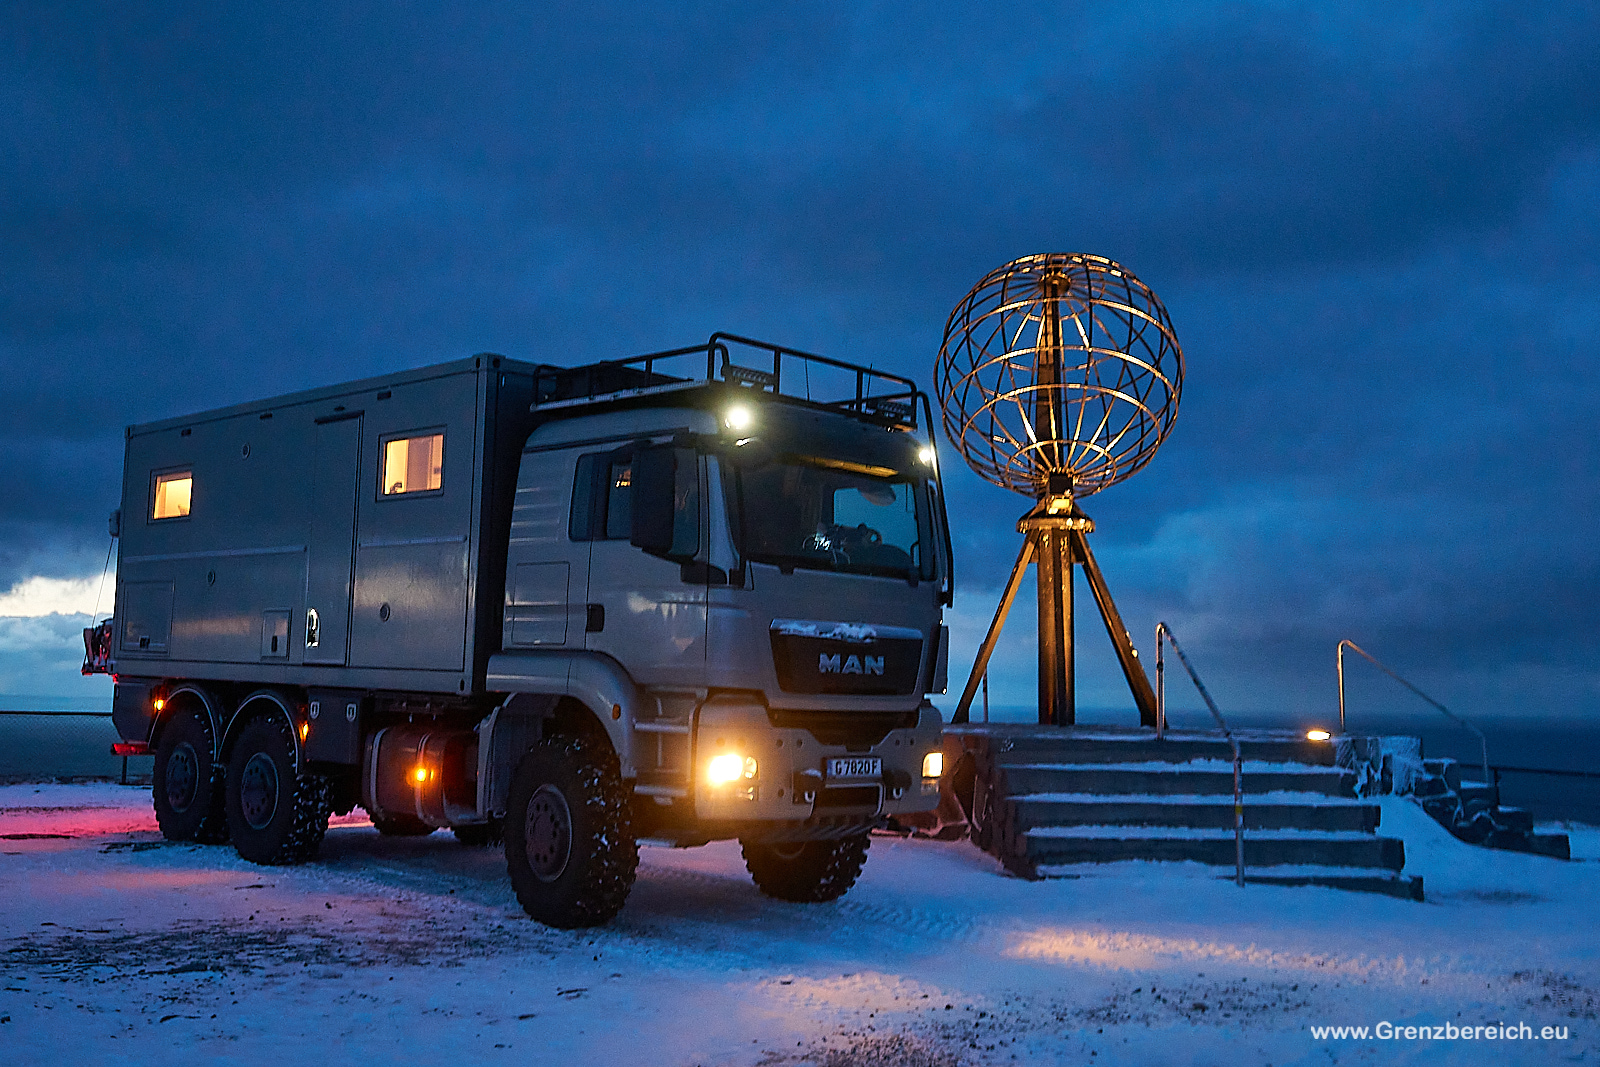 Nordkapp im Winter mit dem Expeditionsmobil